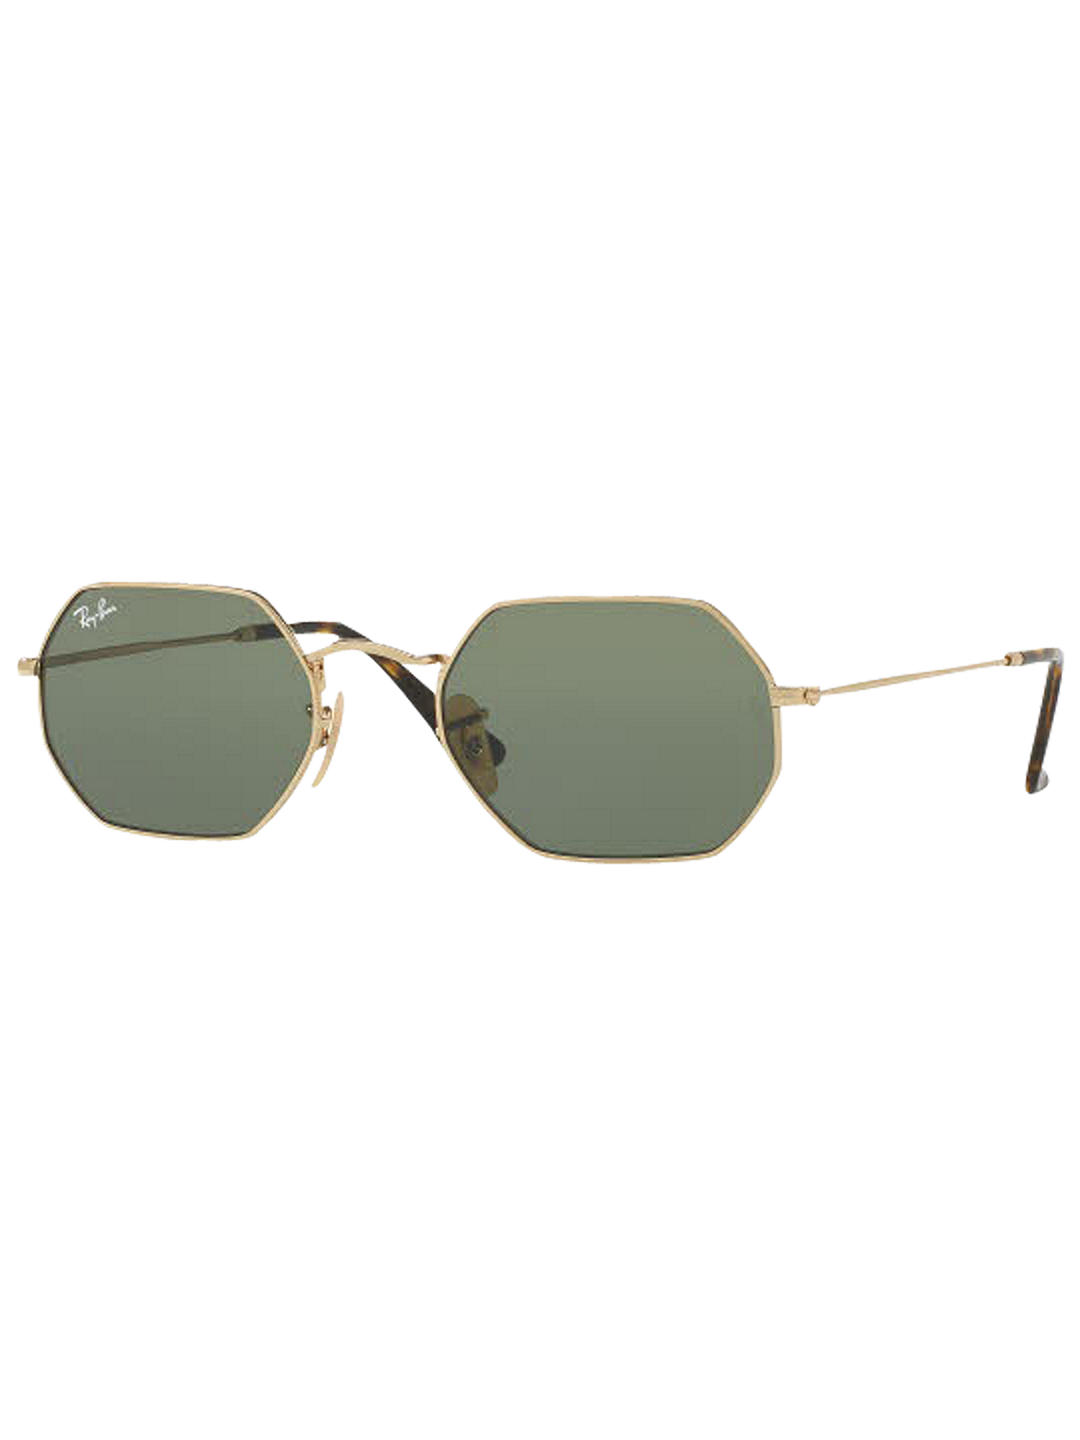 Ray-Ban RB3556N Heptagonal Sunglasses, Gold/Grey